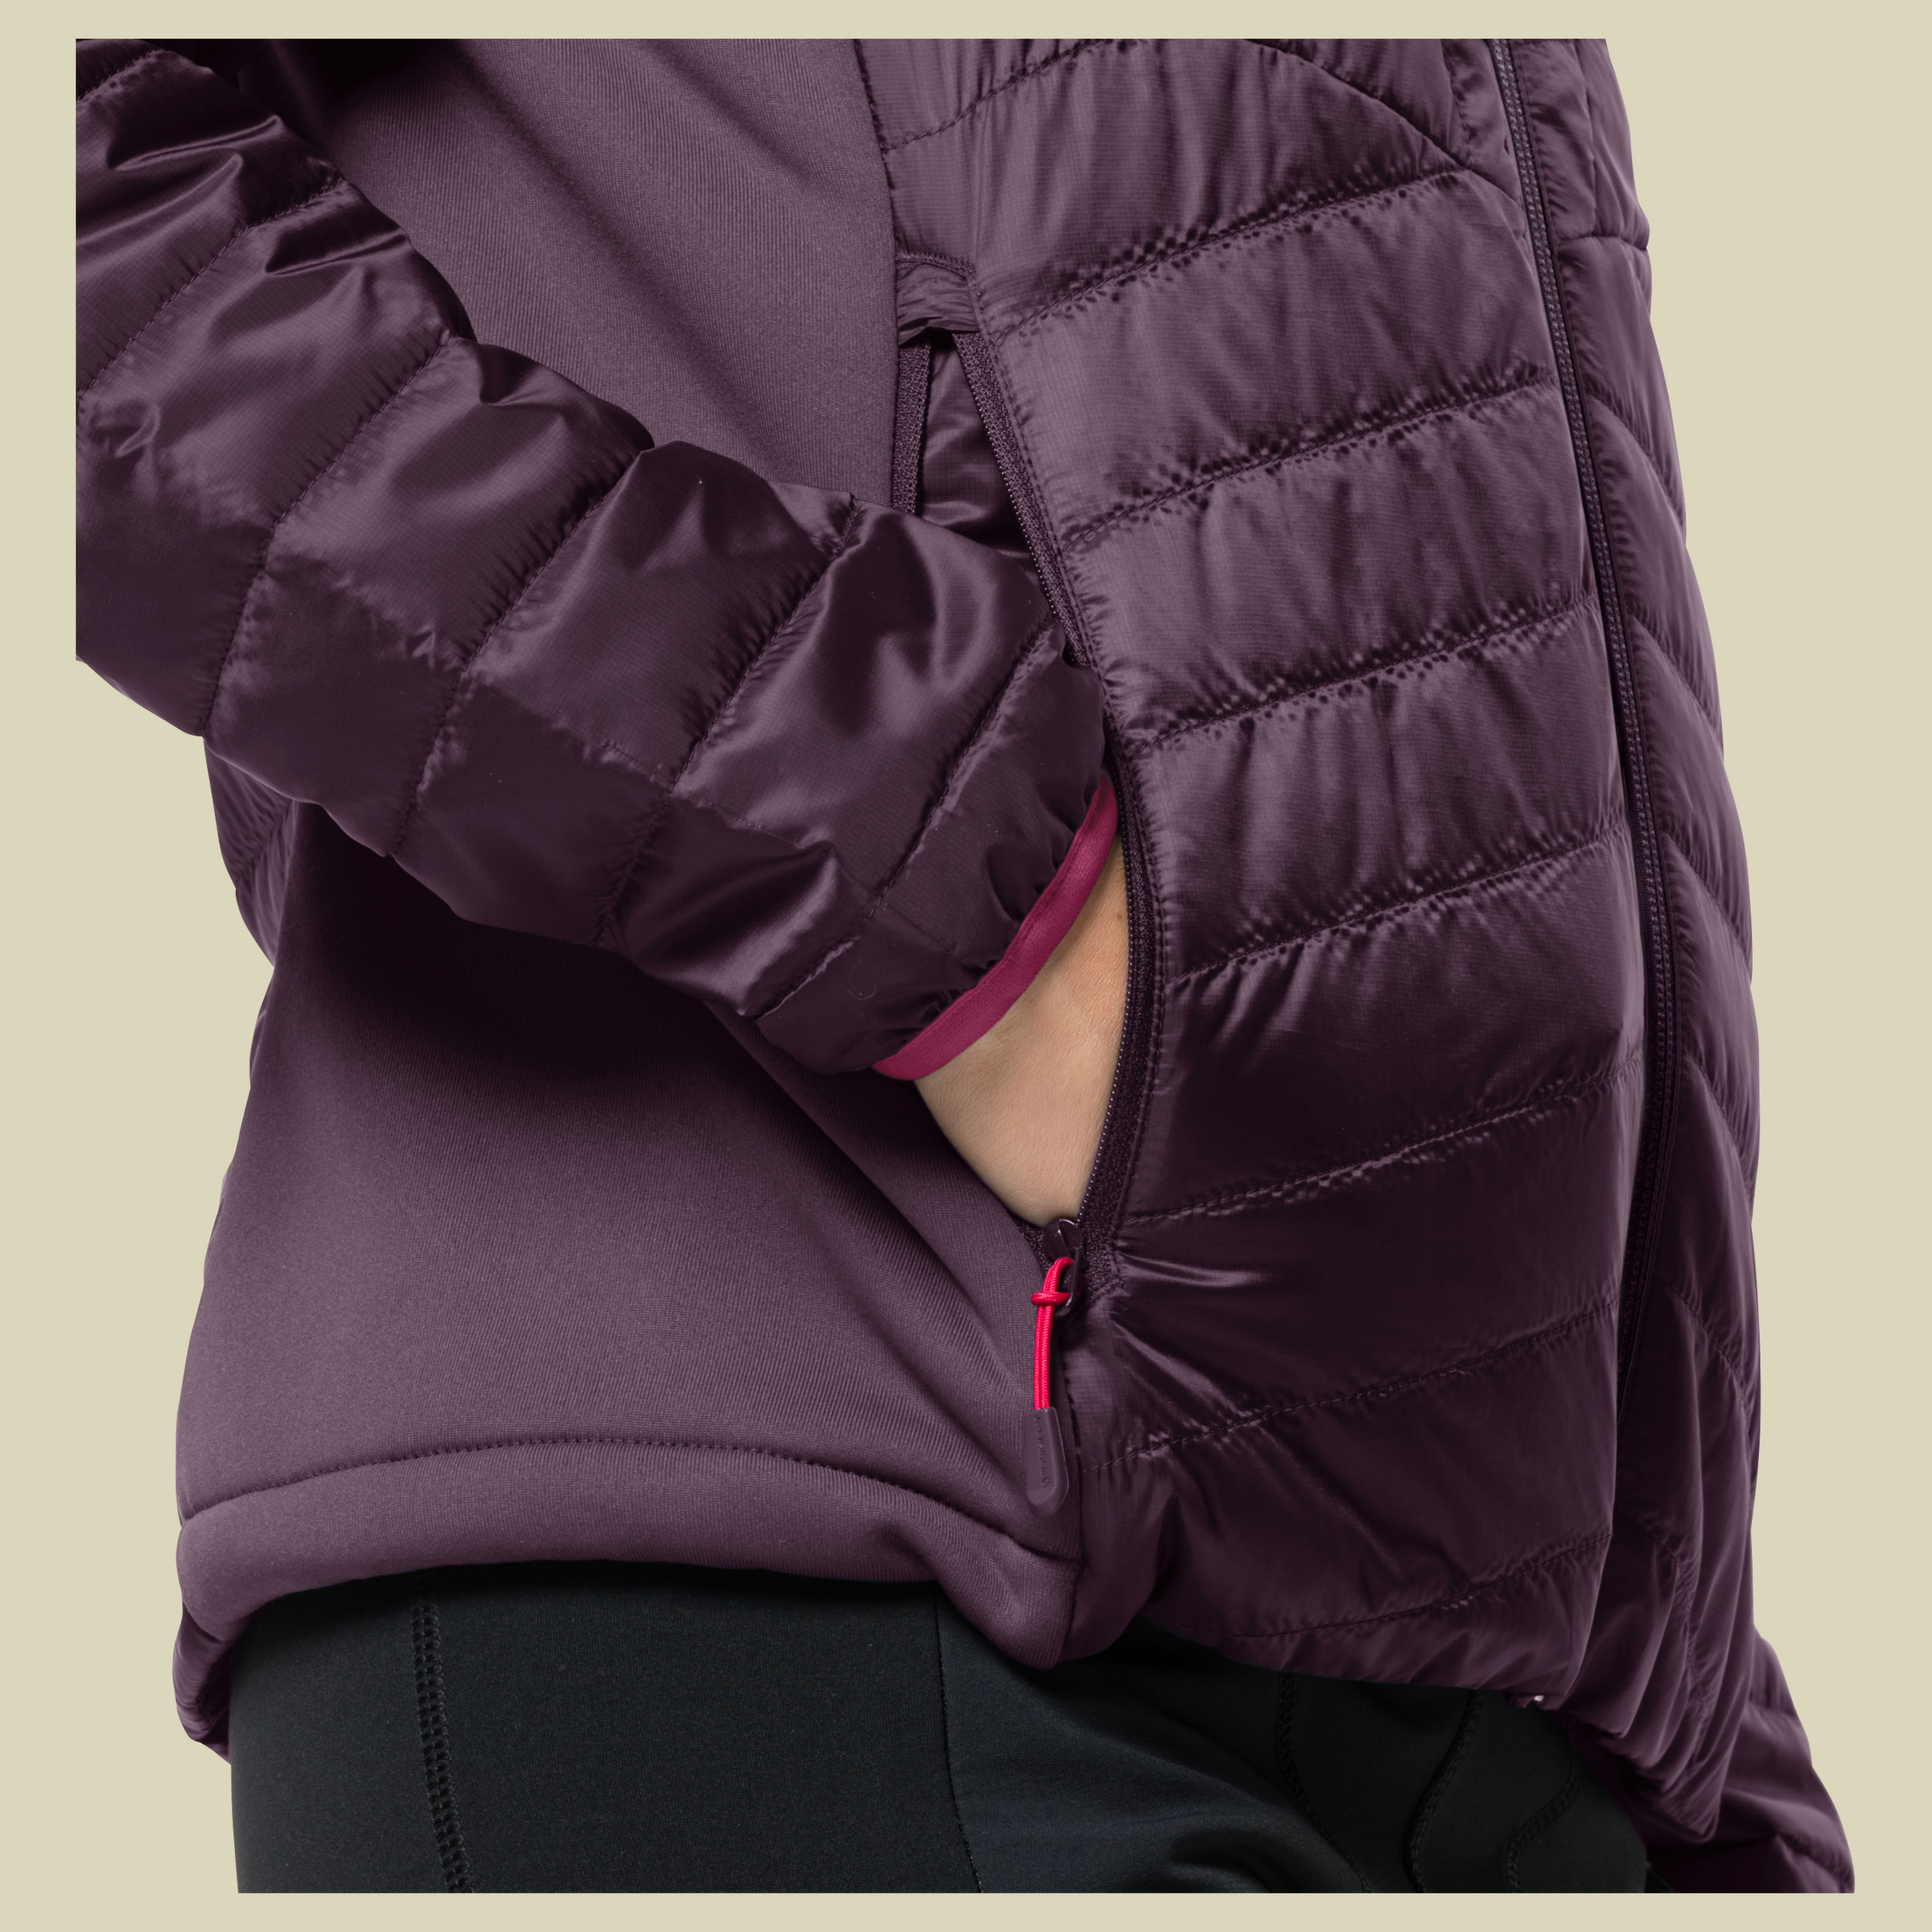 Routeburn Pro Ins Jacket Women Größe XL Farbe grapevine